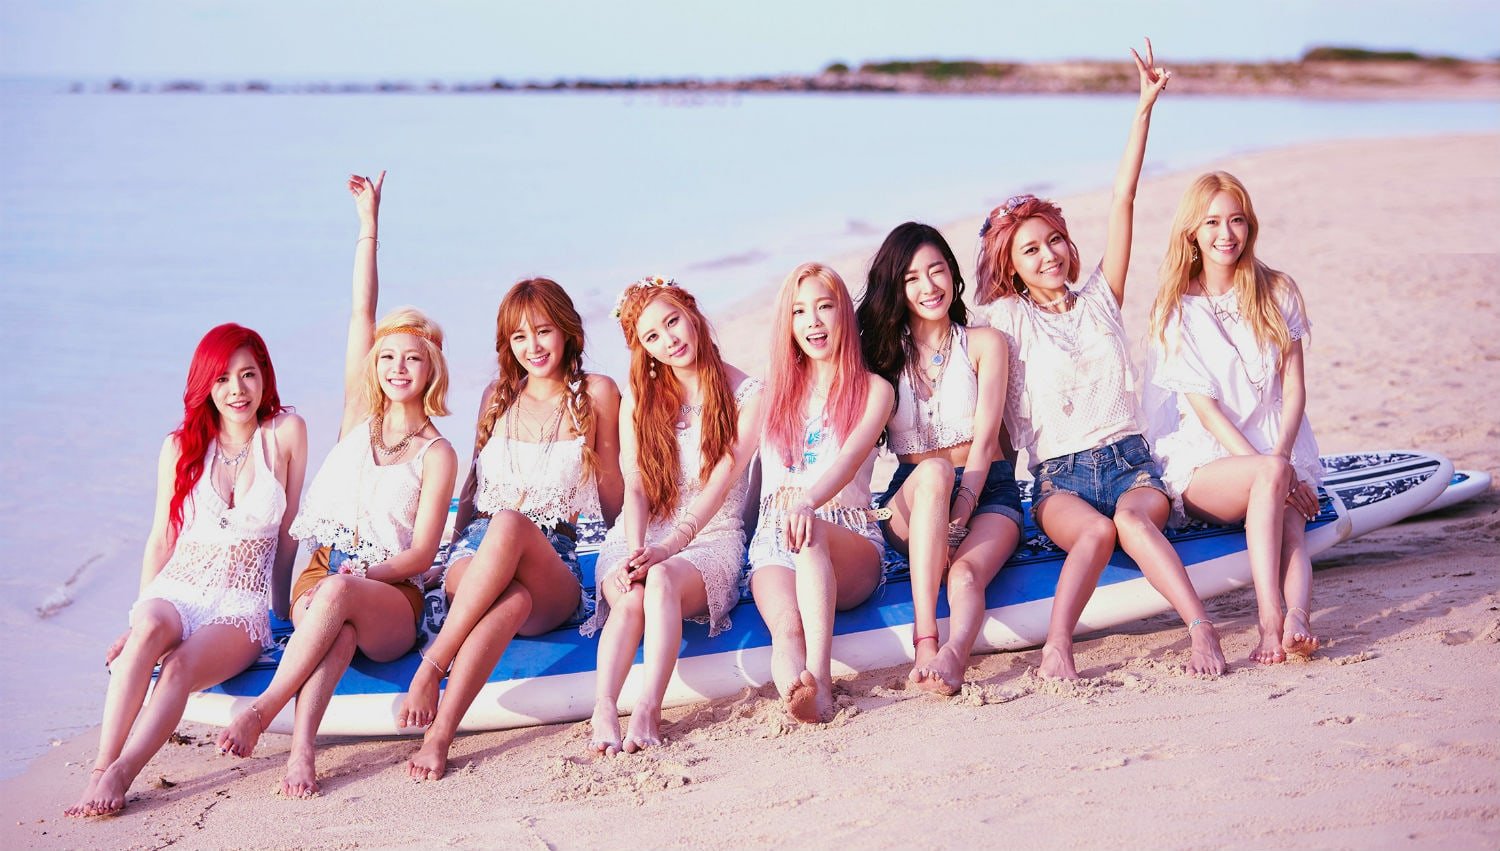 Kpop girl group Girls' Generation